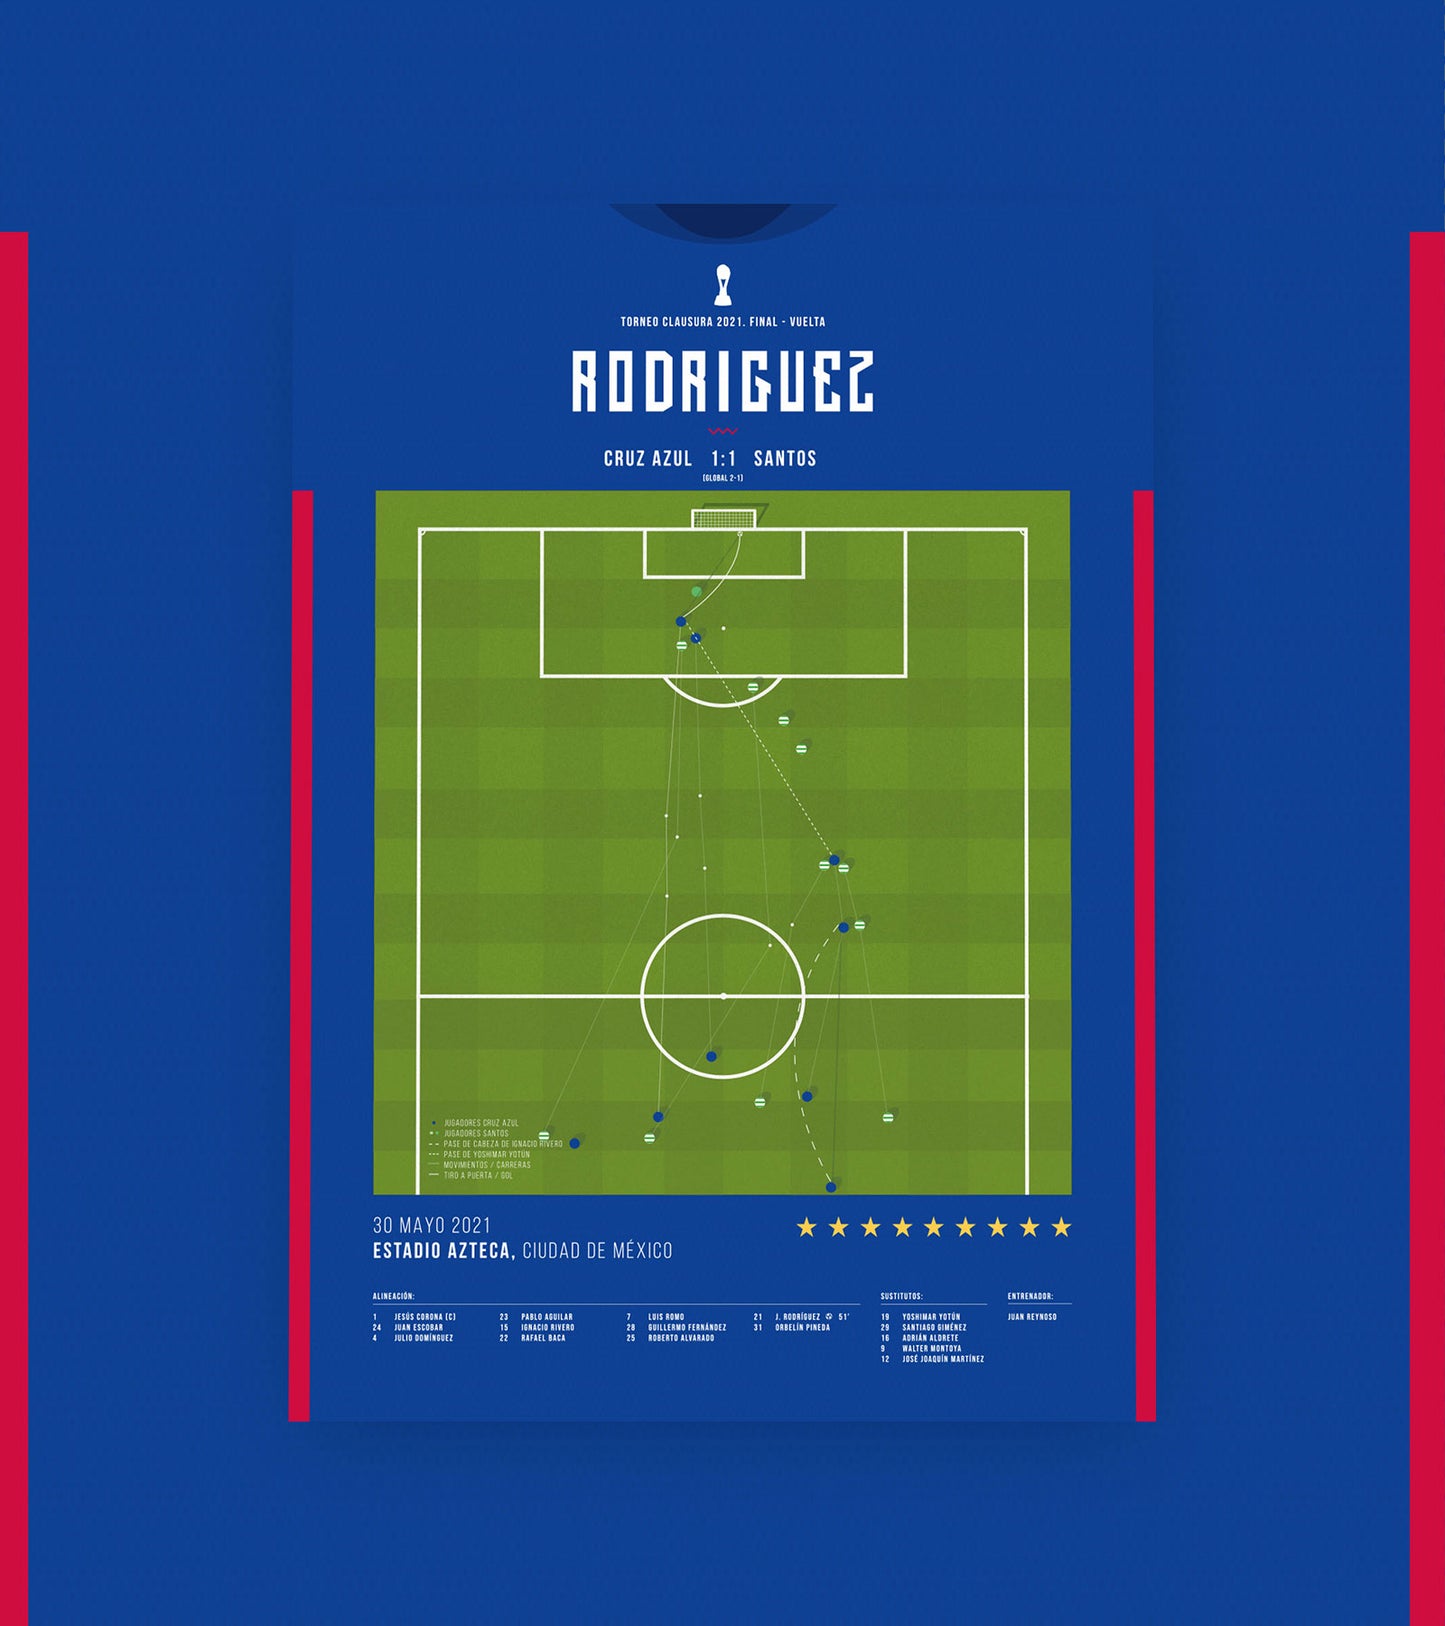 "Cabecita" Rodríguez's goal gives Cruz Azul the 'Novena' title